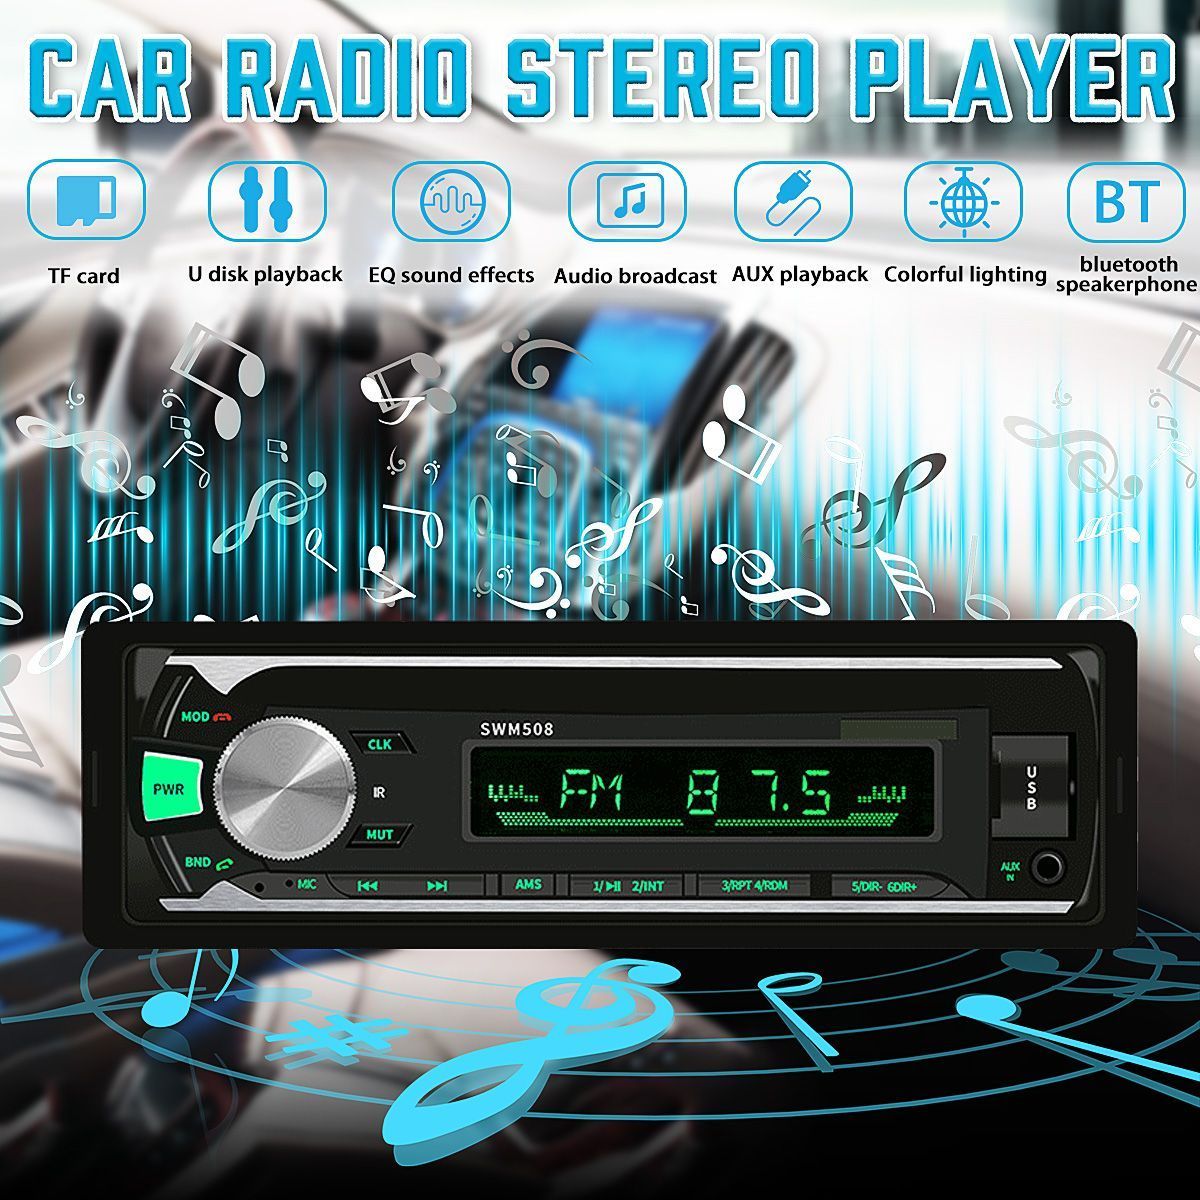 bluetooth-Auto-Radio-Car-Stereo-Radio-FM-Aux-Input-Receiver-TF-USB-12V-In-dash-1-Din-Car-MP3-Multime-1553606